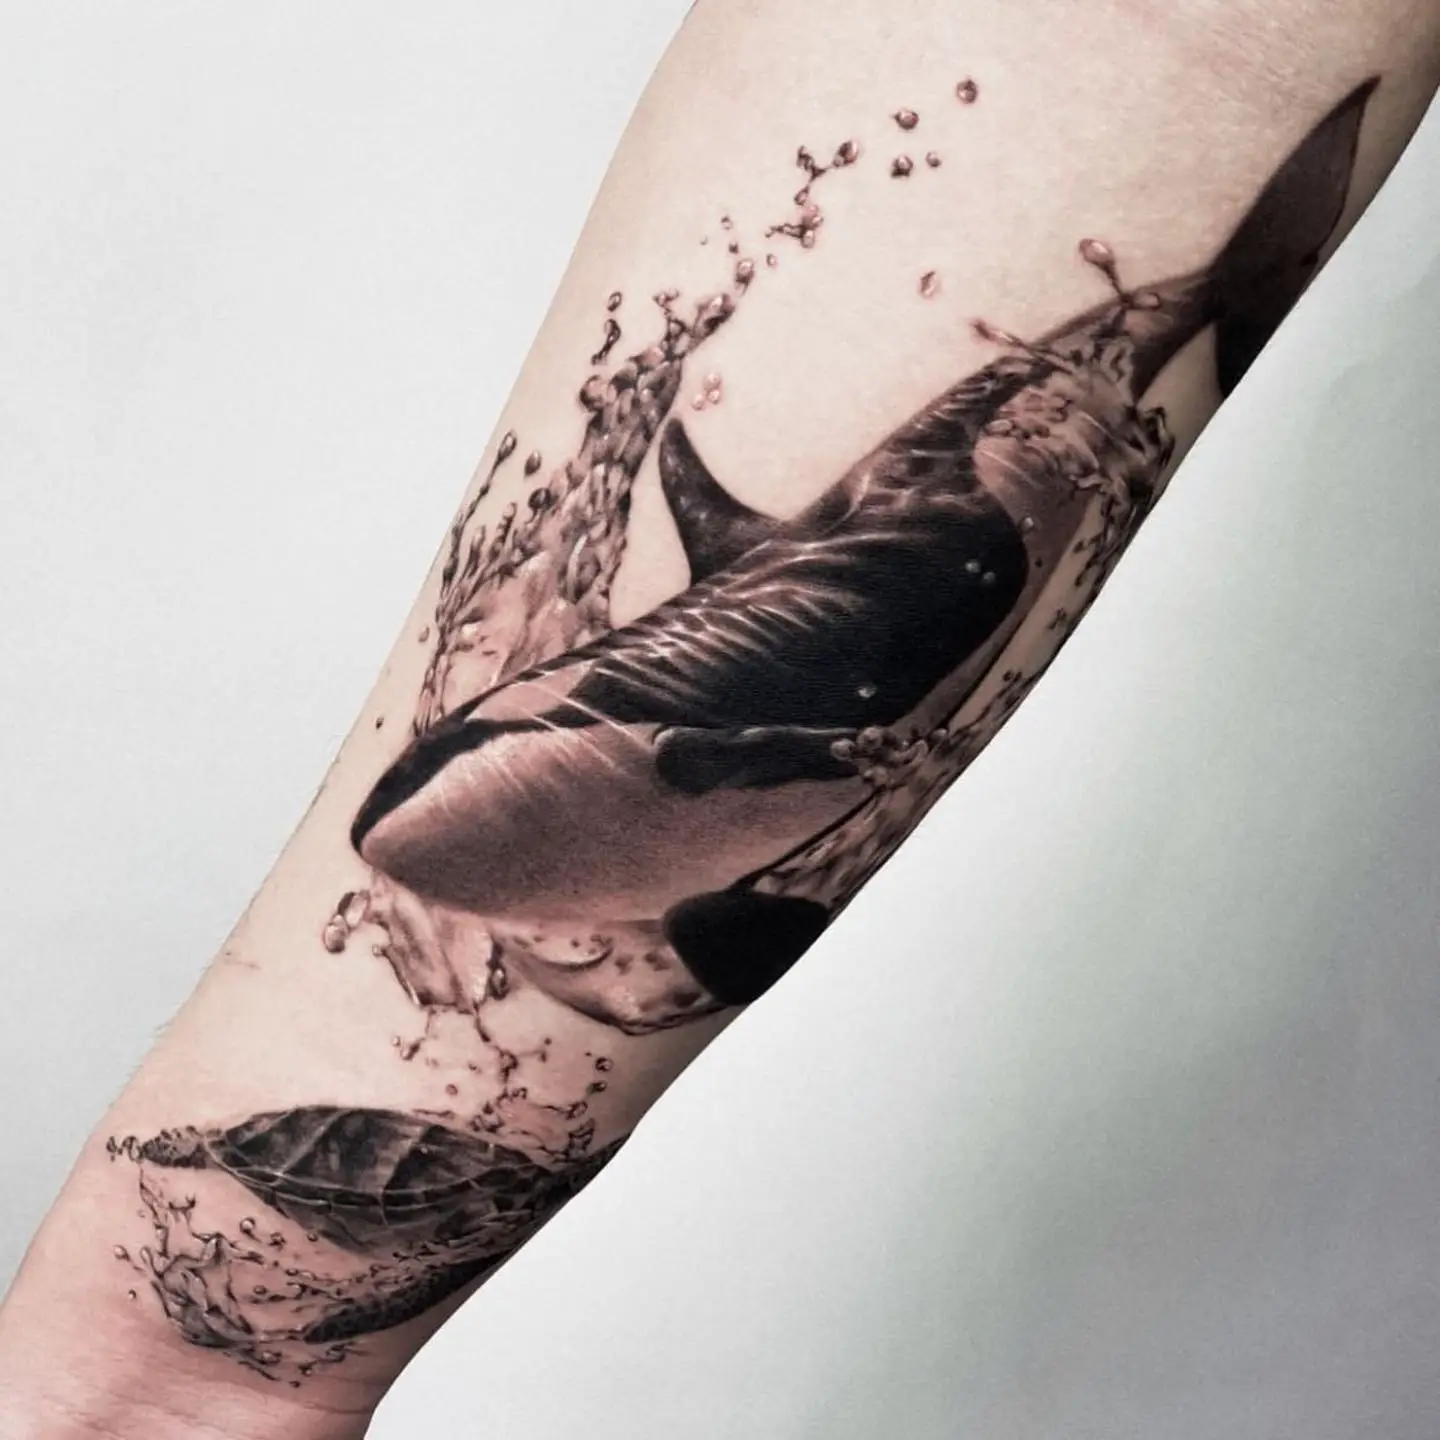 Orca whale tattoo by southcitymarket